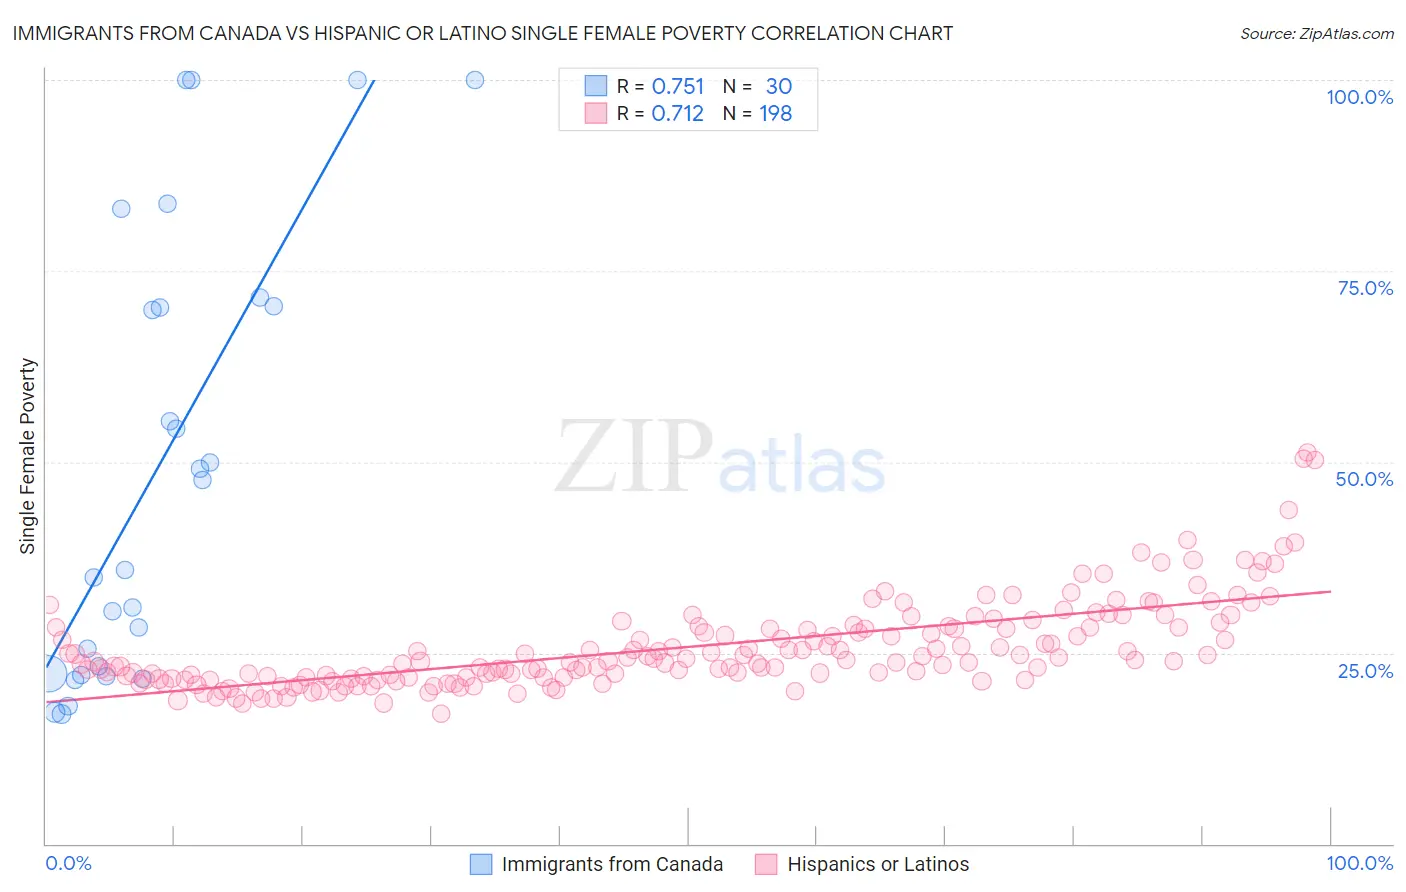 Immigrants from Canada vs Hispanic or Latino Single Female Poverty